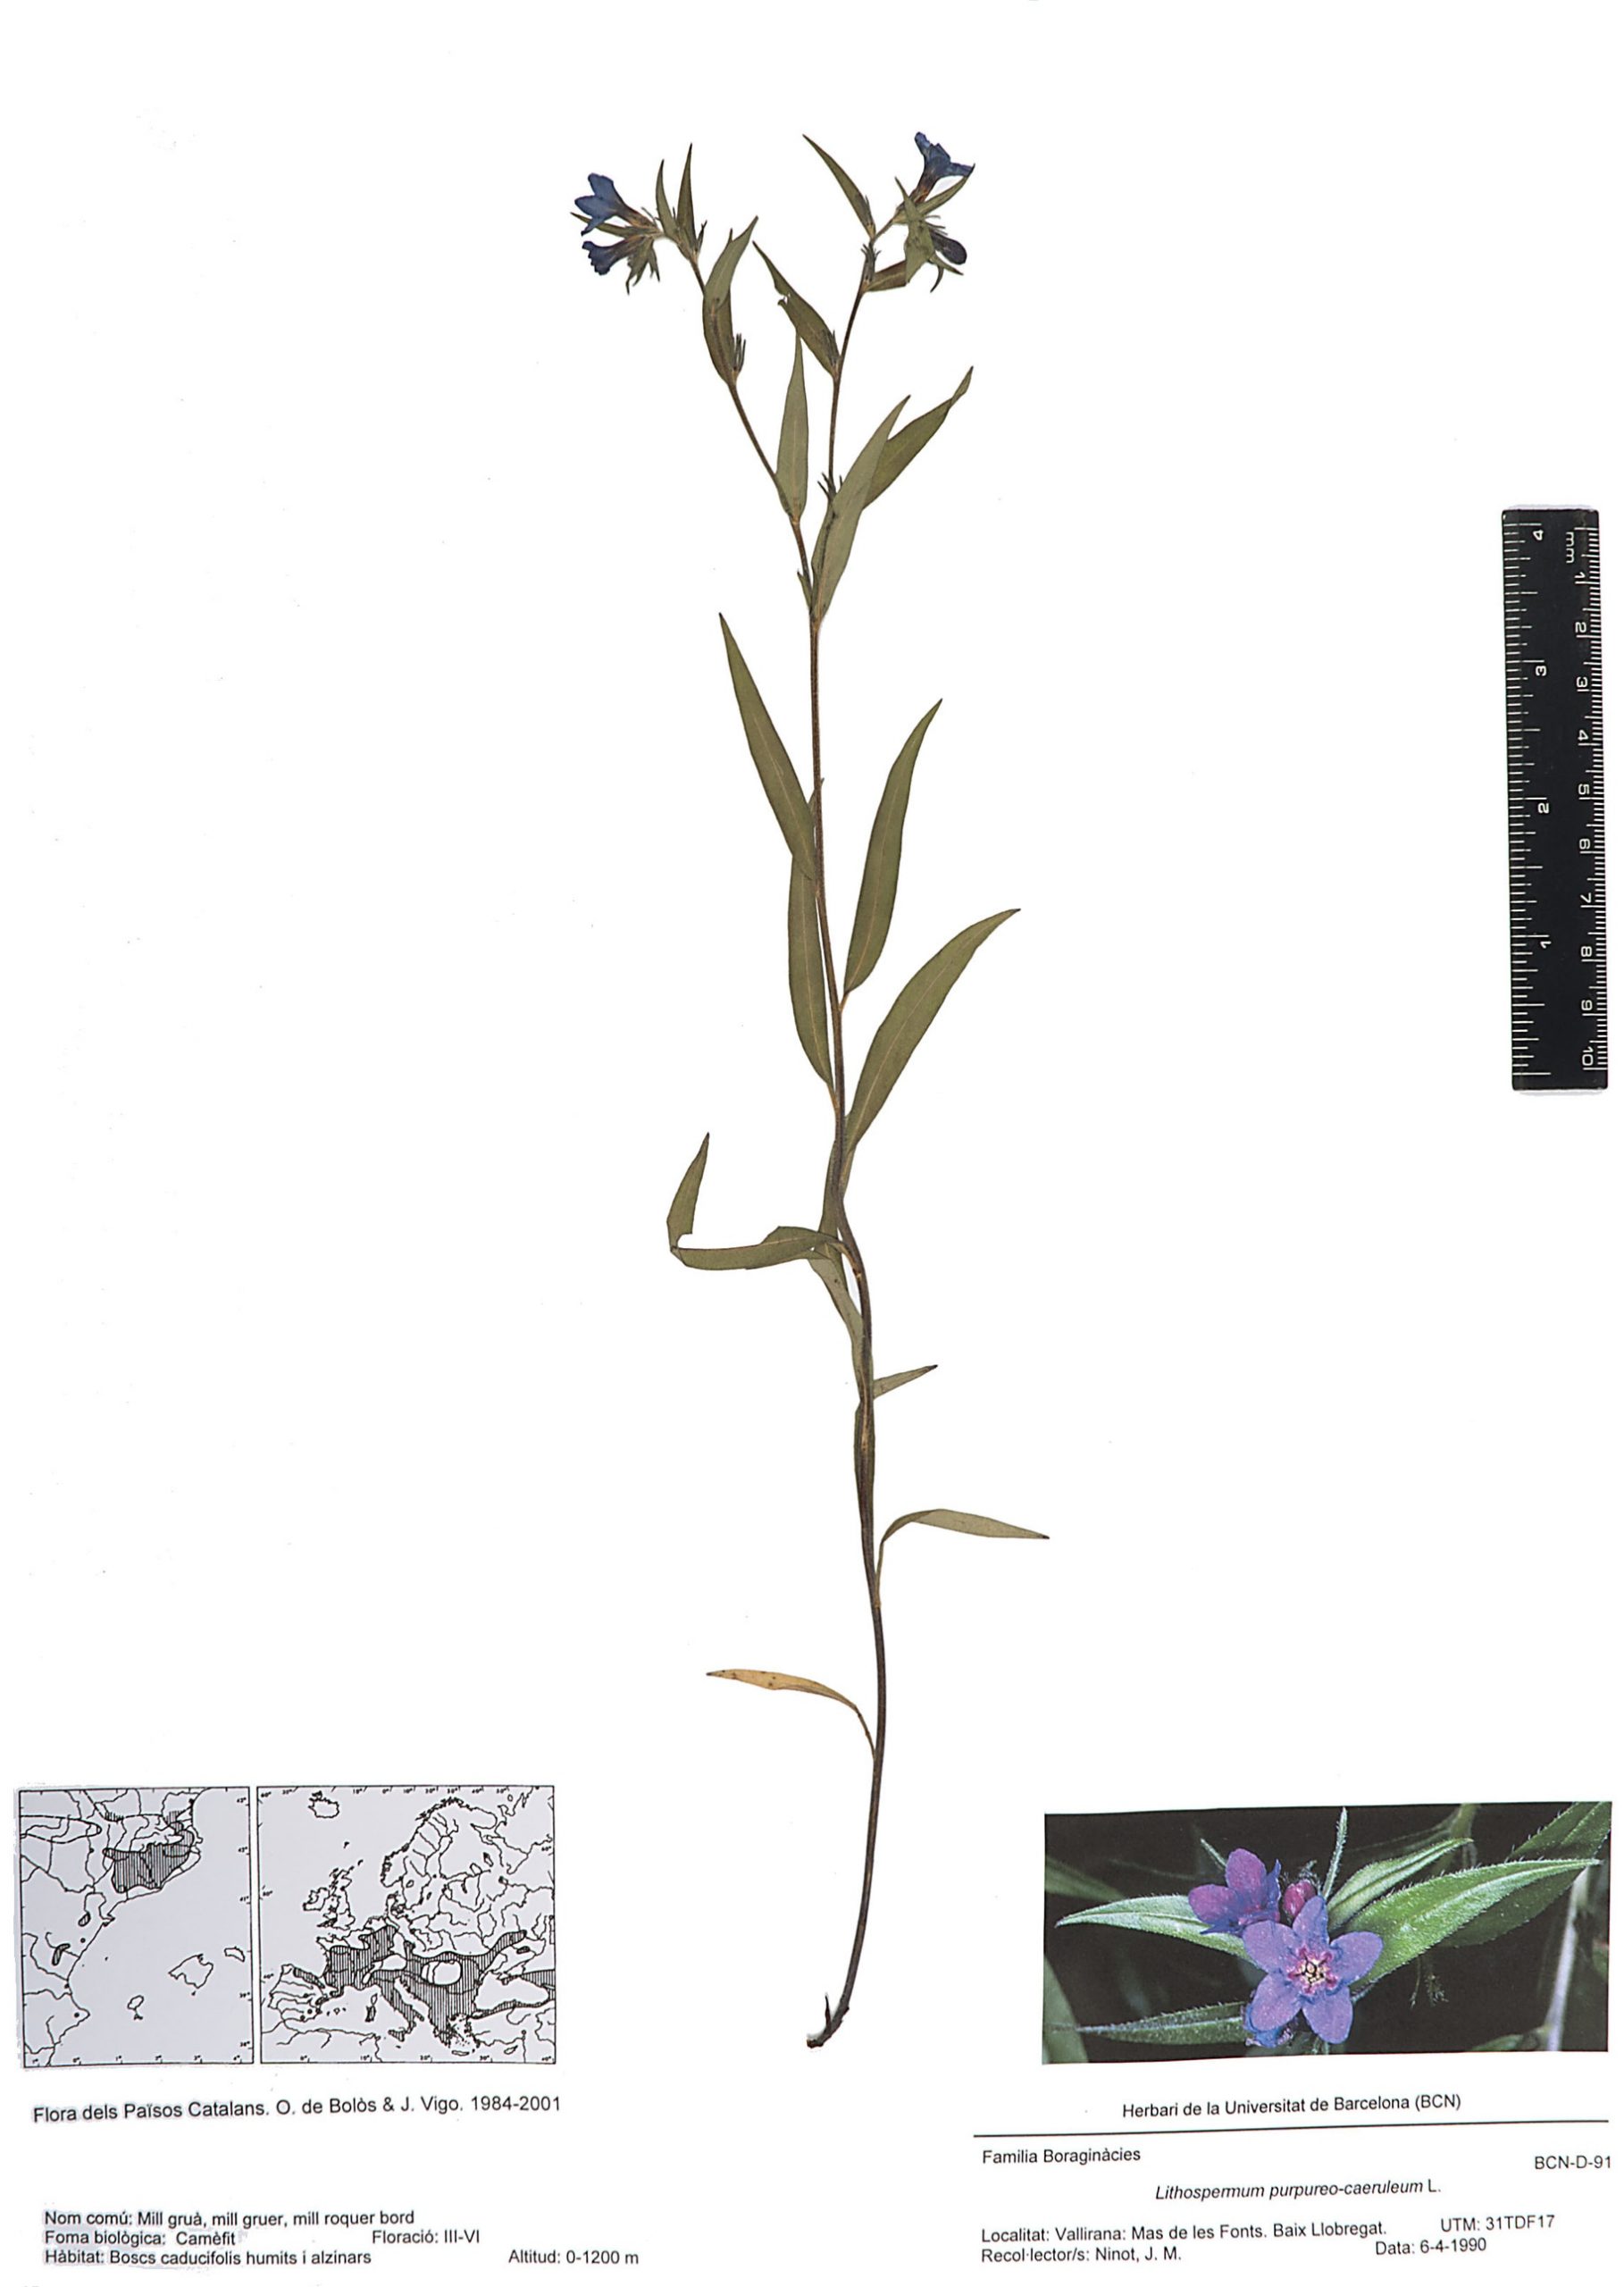 Lithospermum purpureo-caeruleum L. (Mill gruà, mill gruer, mill roquer bord)